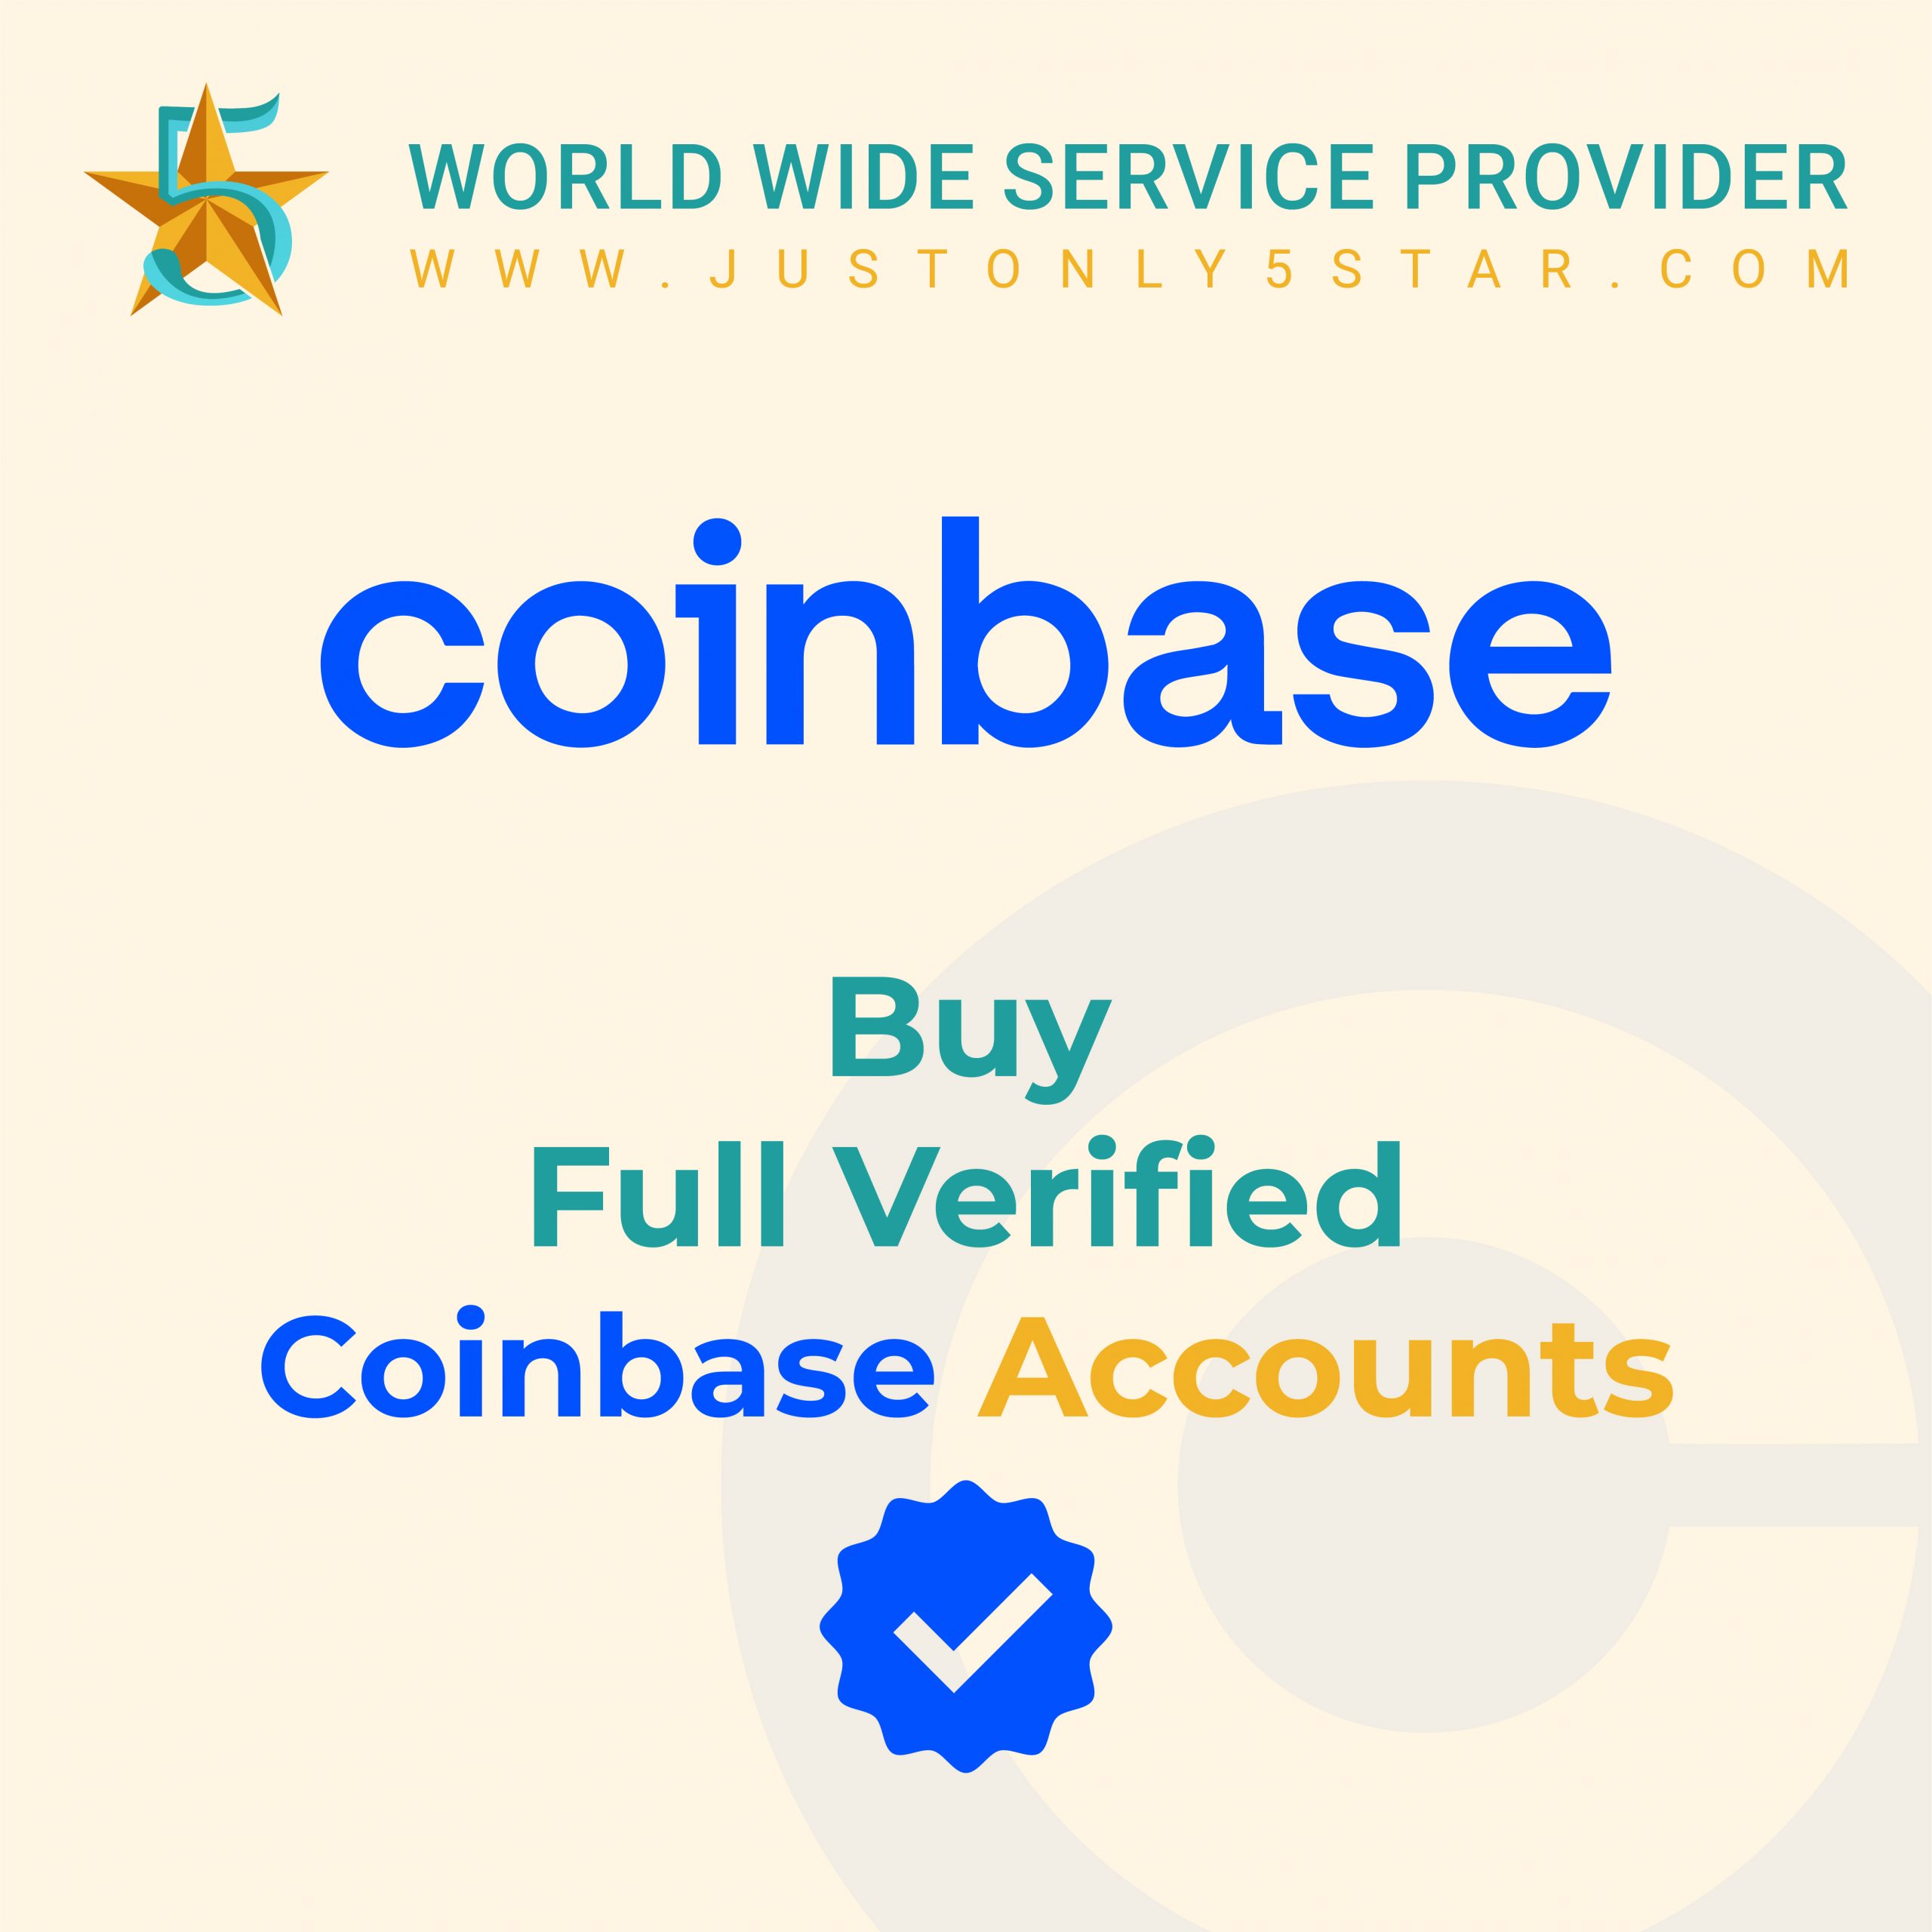 Buy Verified Coinbase Accounts - 100% Fully Verified Coinbase...